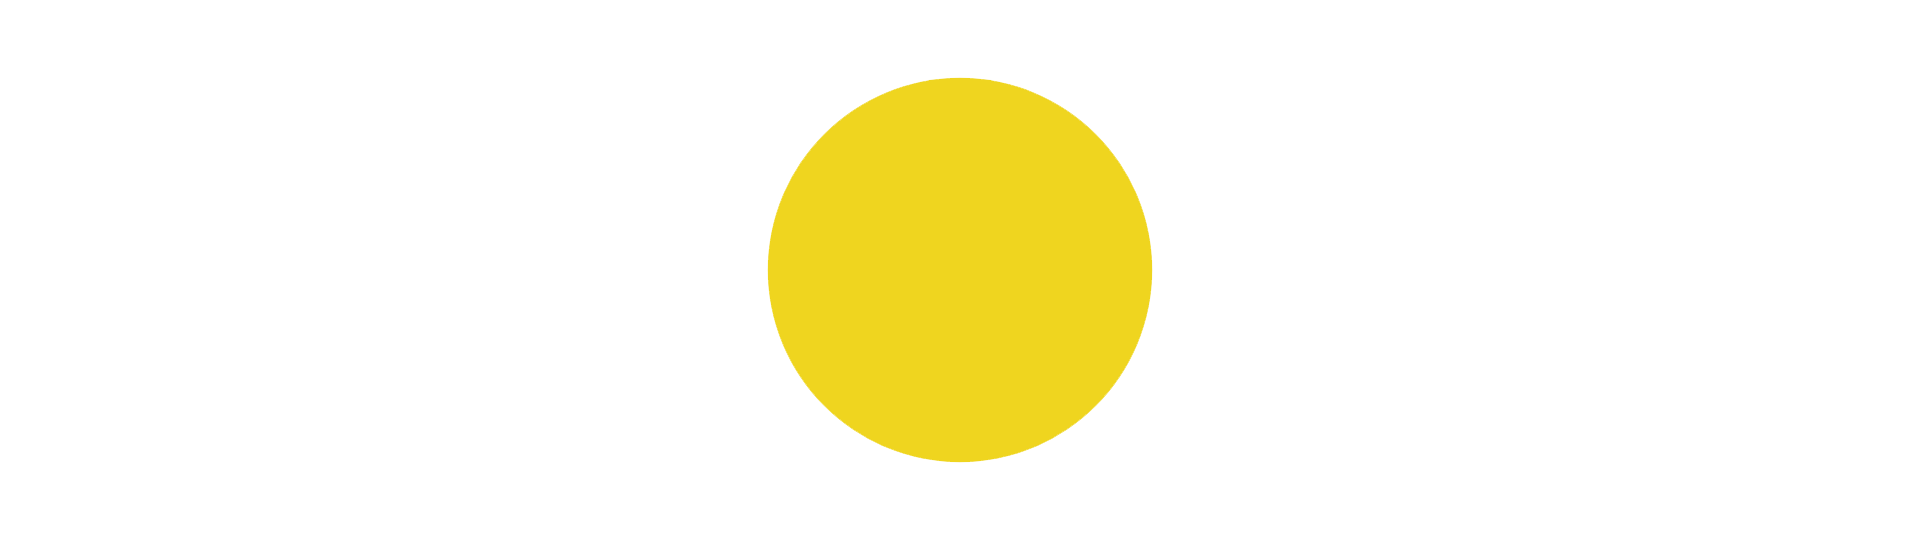 Warm Yellow: People & Purpose